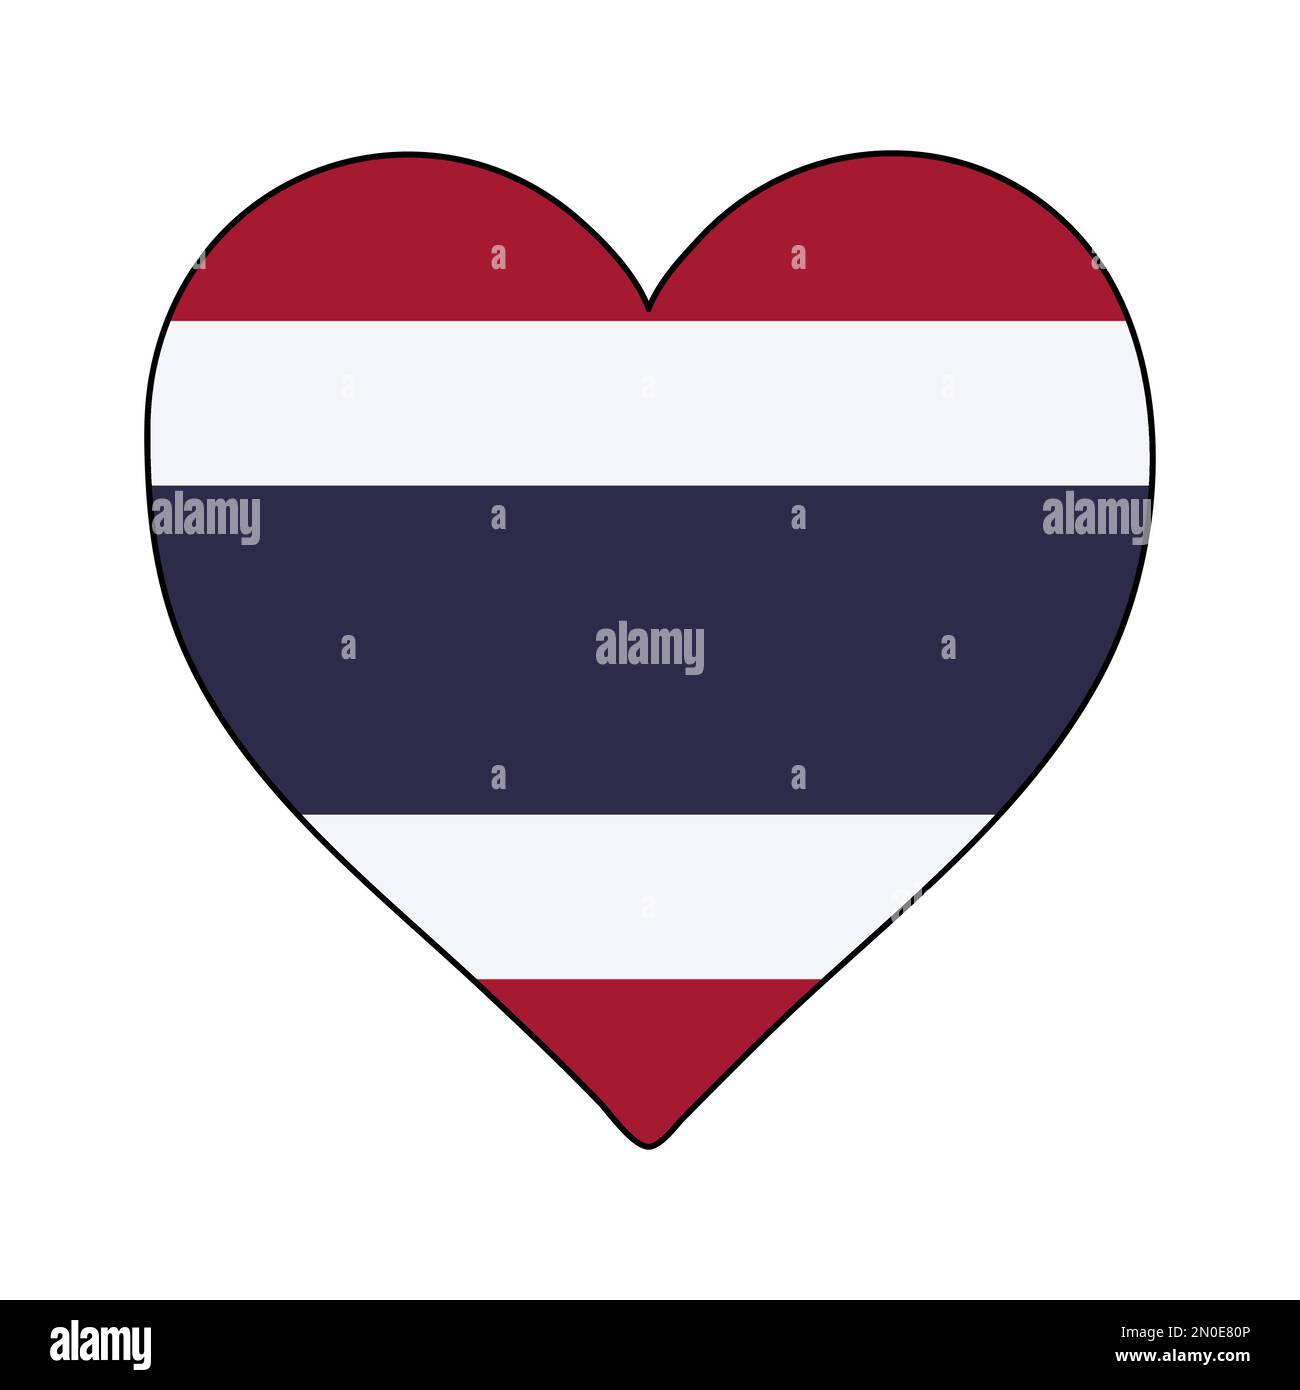 Thailandia Heart Shape Flag. Ama la Thailandia. Visita la Thailandia. Disegno grafico dell'illustrazione vettoriale. Illustrazione Vettoriale